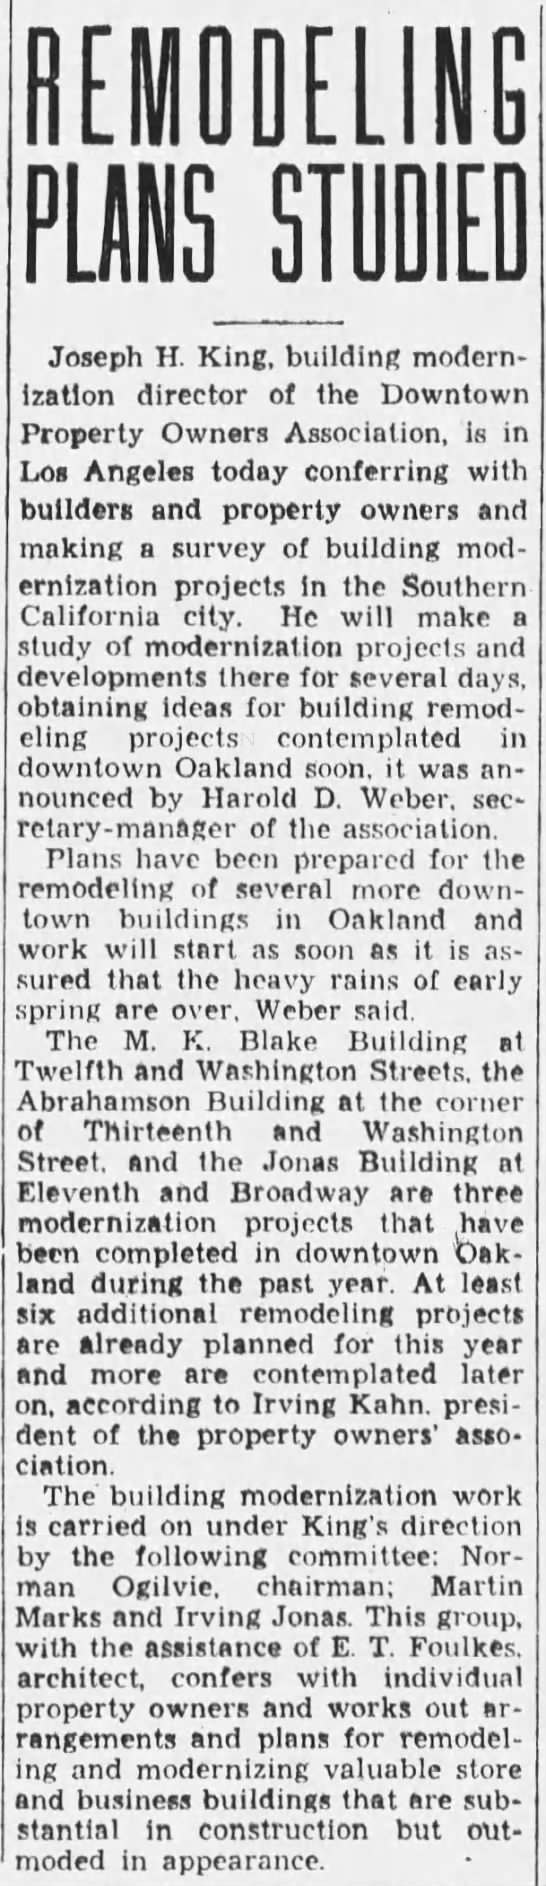 Remodeling Plans Studied - Feb 23, 1933 - 